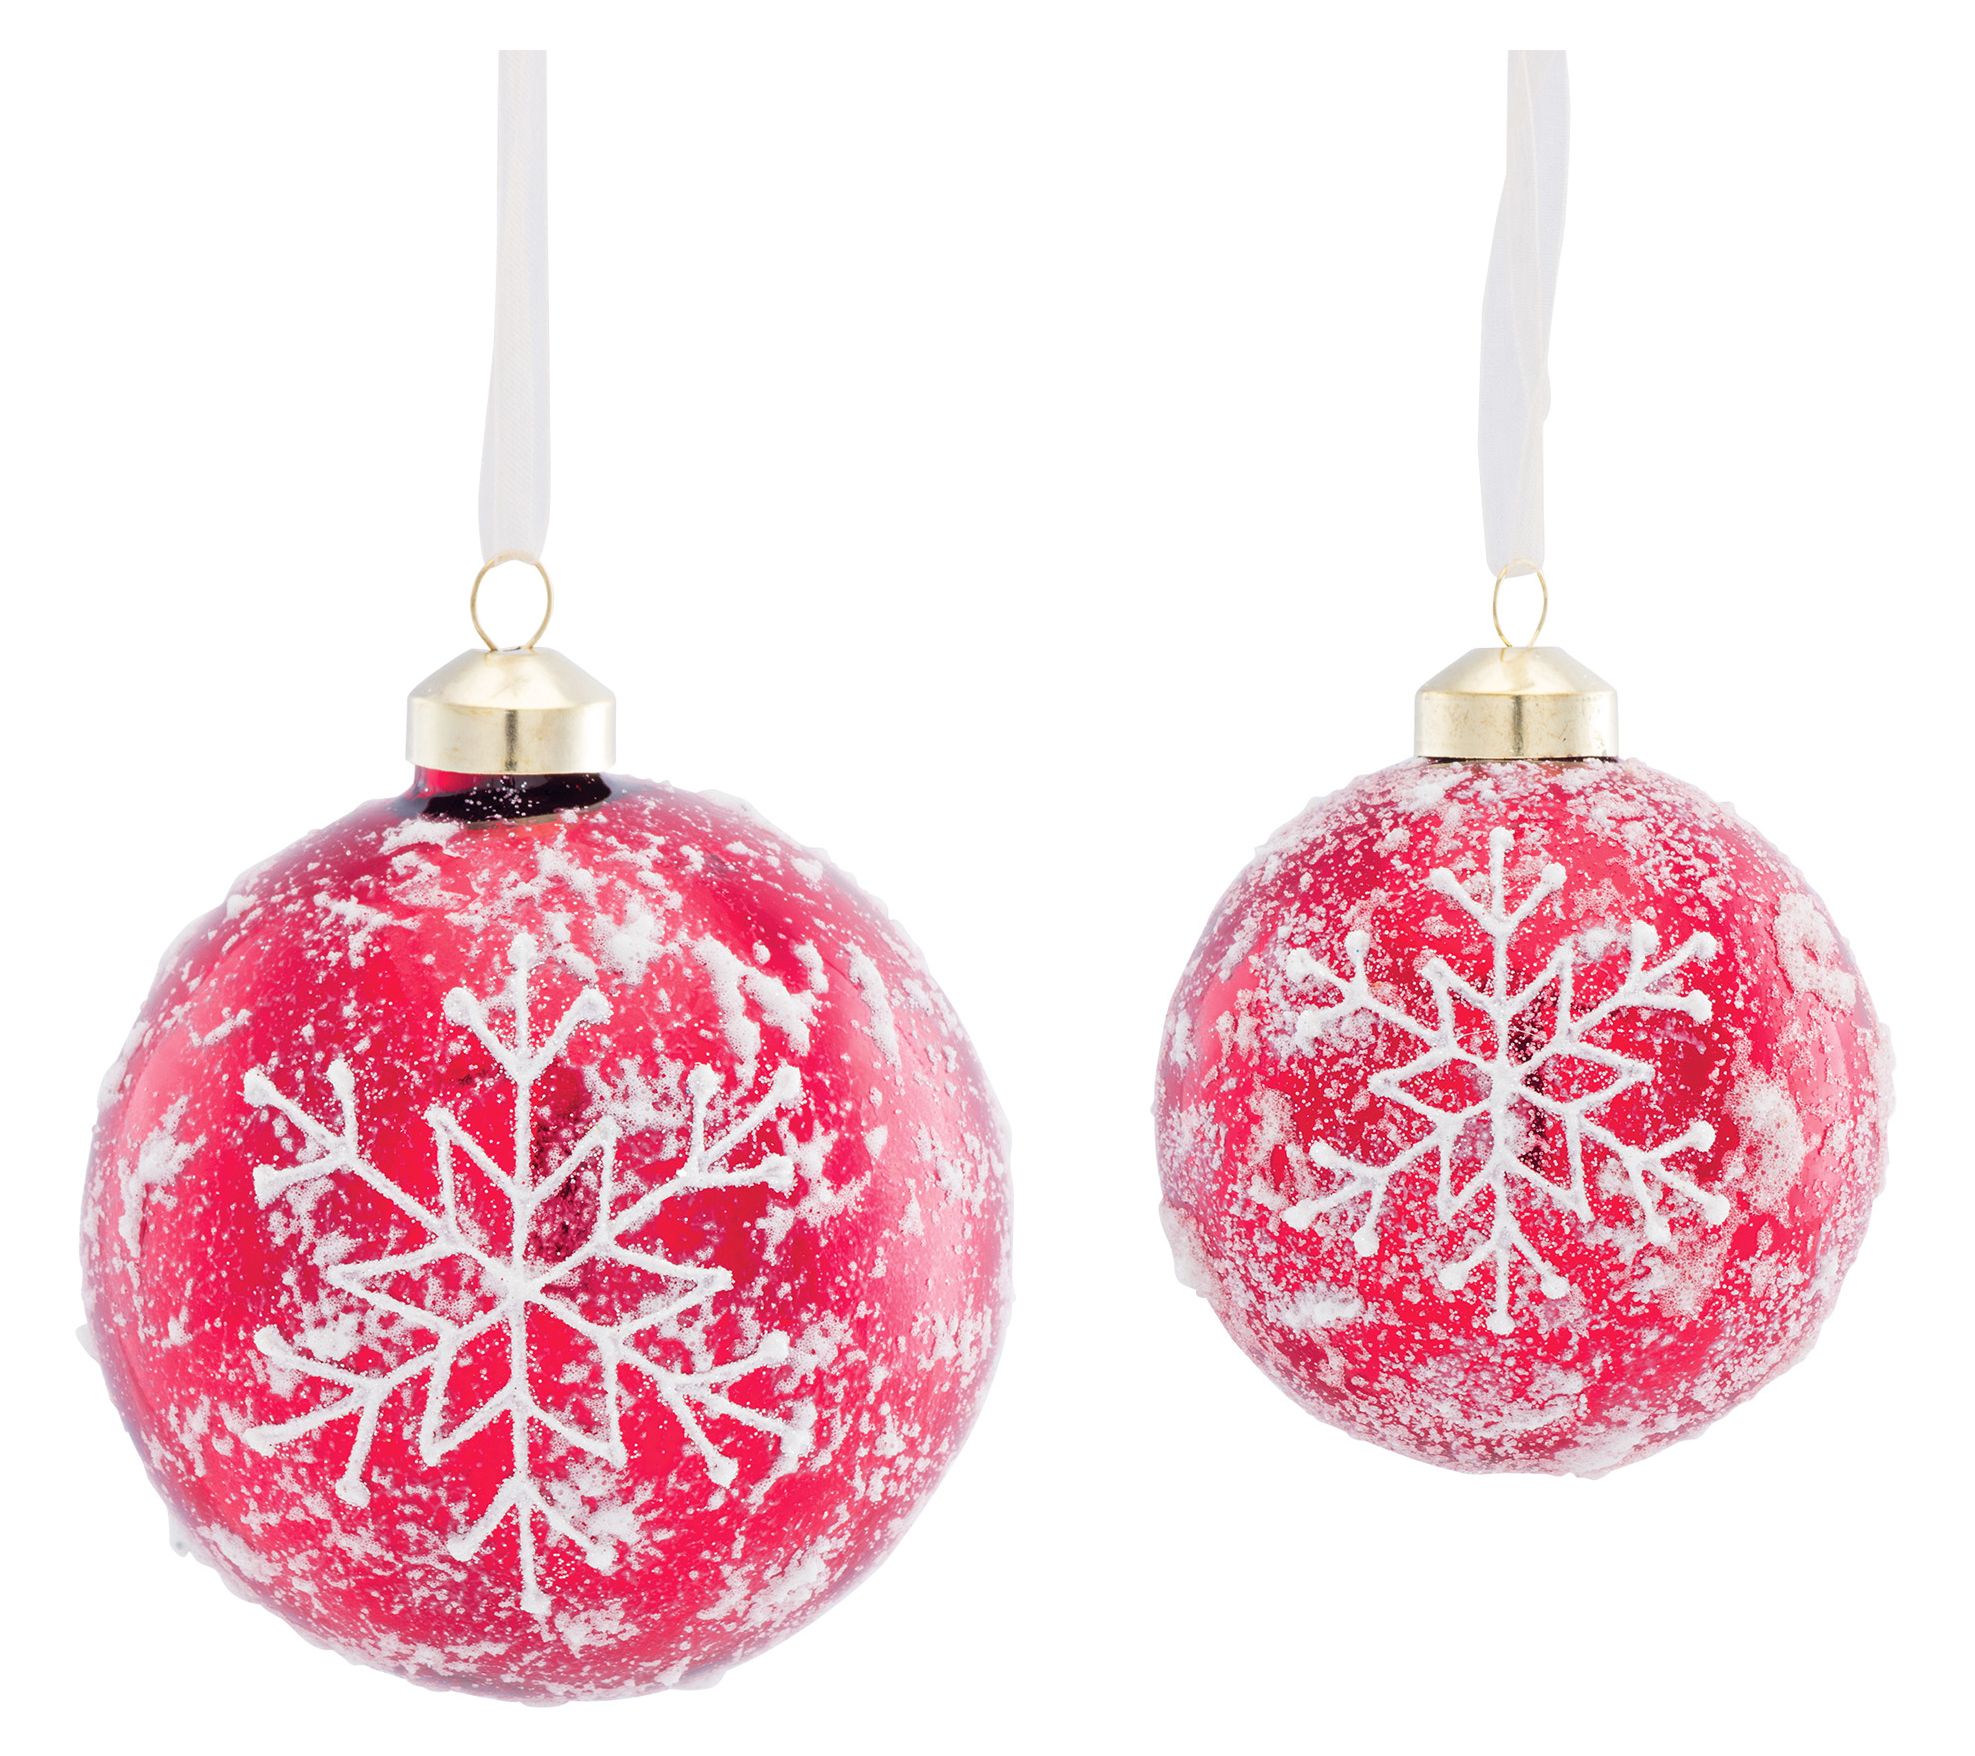 5 Martha Stewart Everyday Holiday Christmas Glass Ornaments Pink